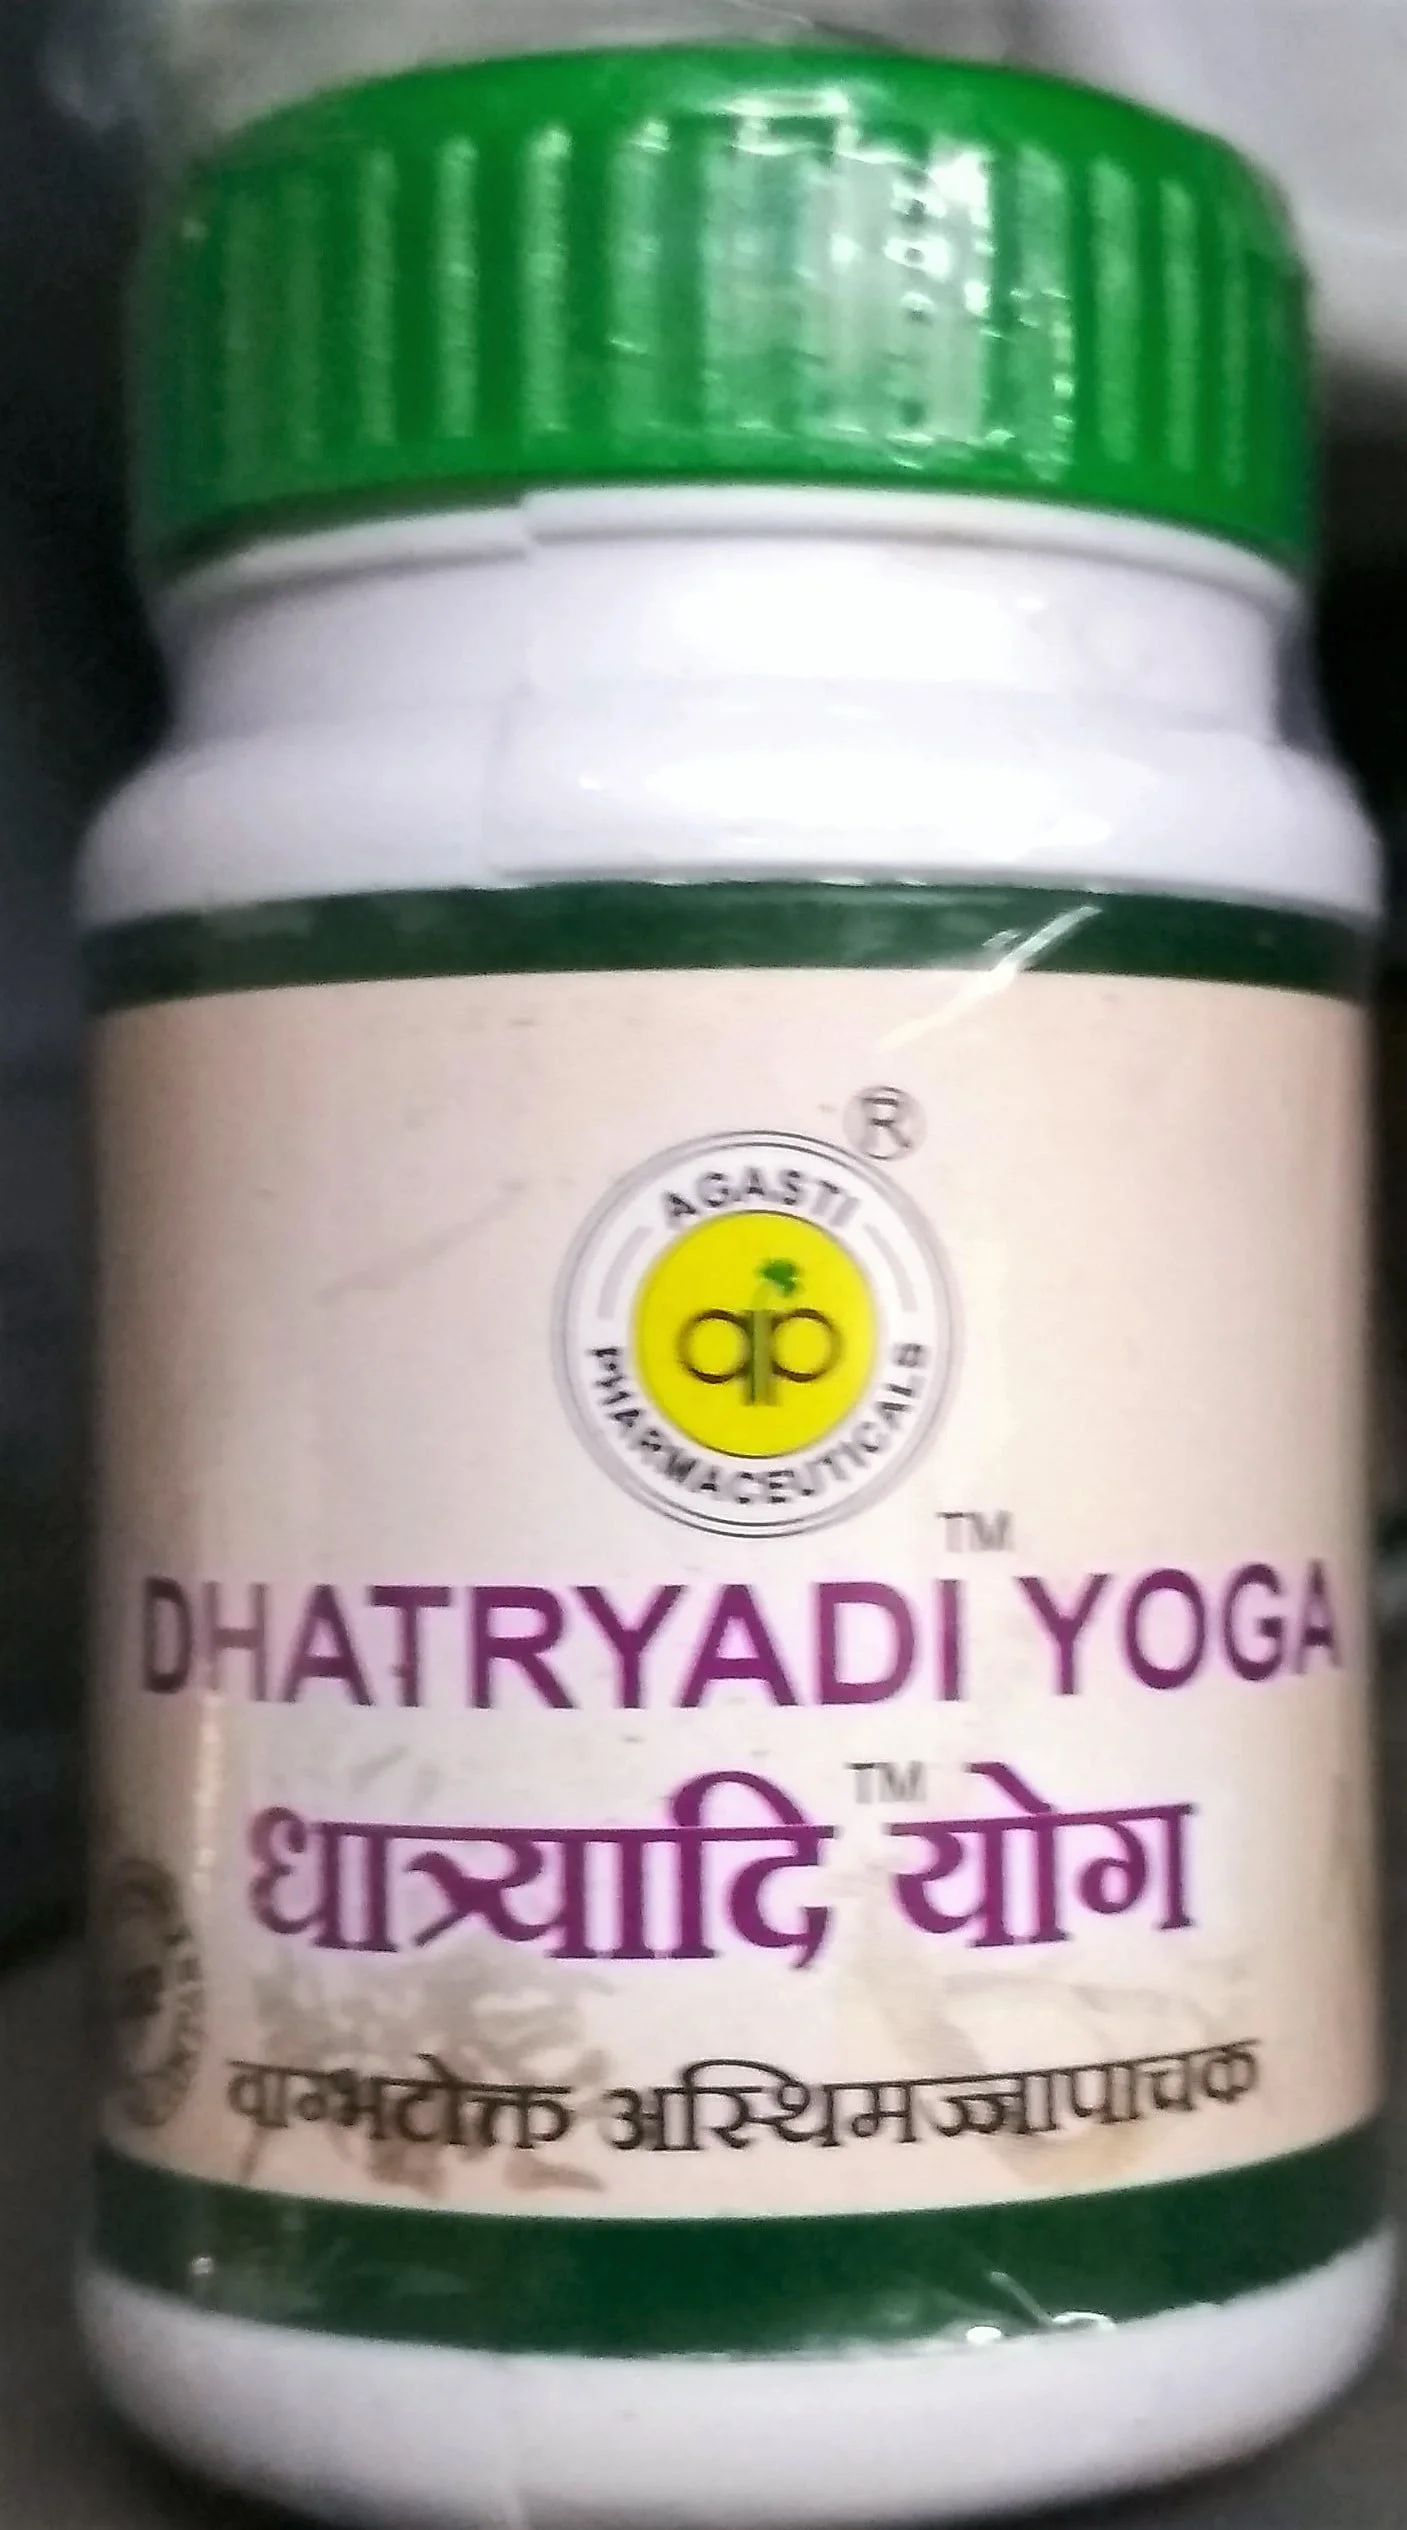 dhatryadi yog 250gm 1000tabs upto 15% off agasti pharmaceuticals